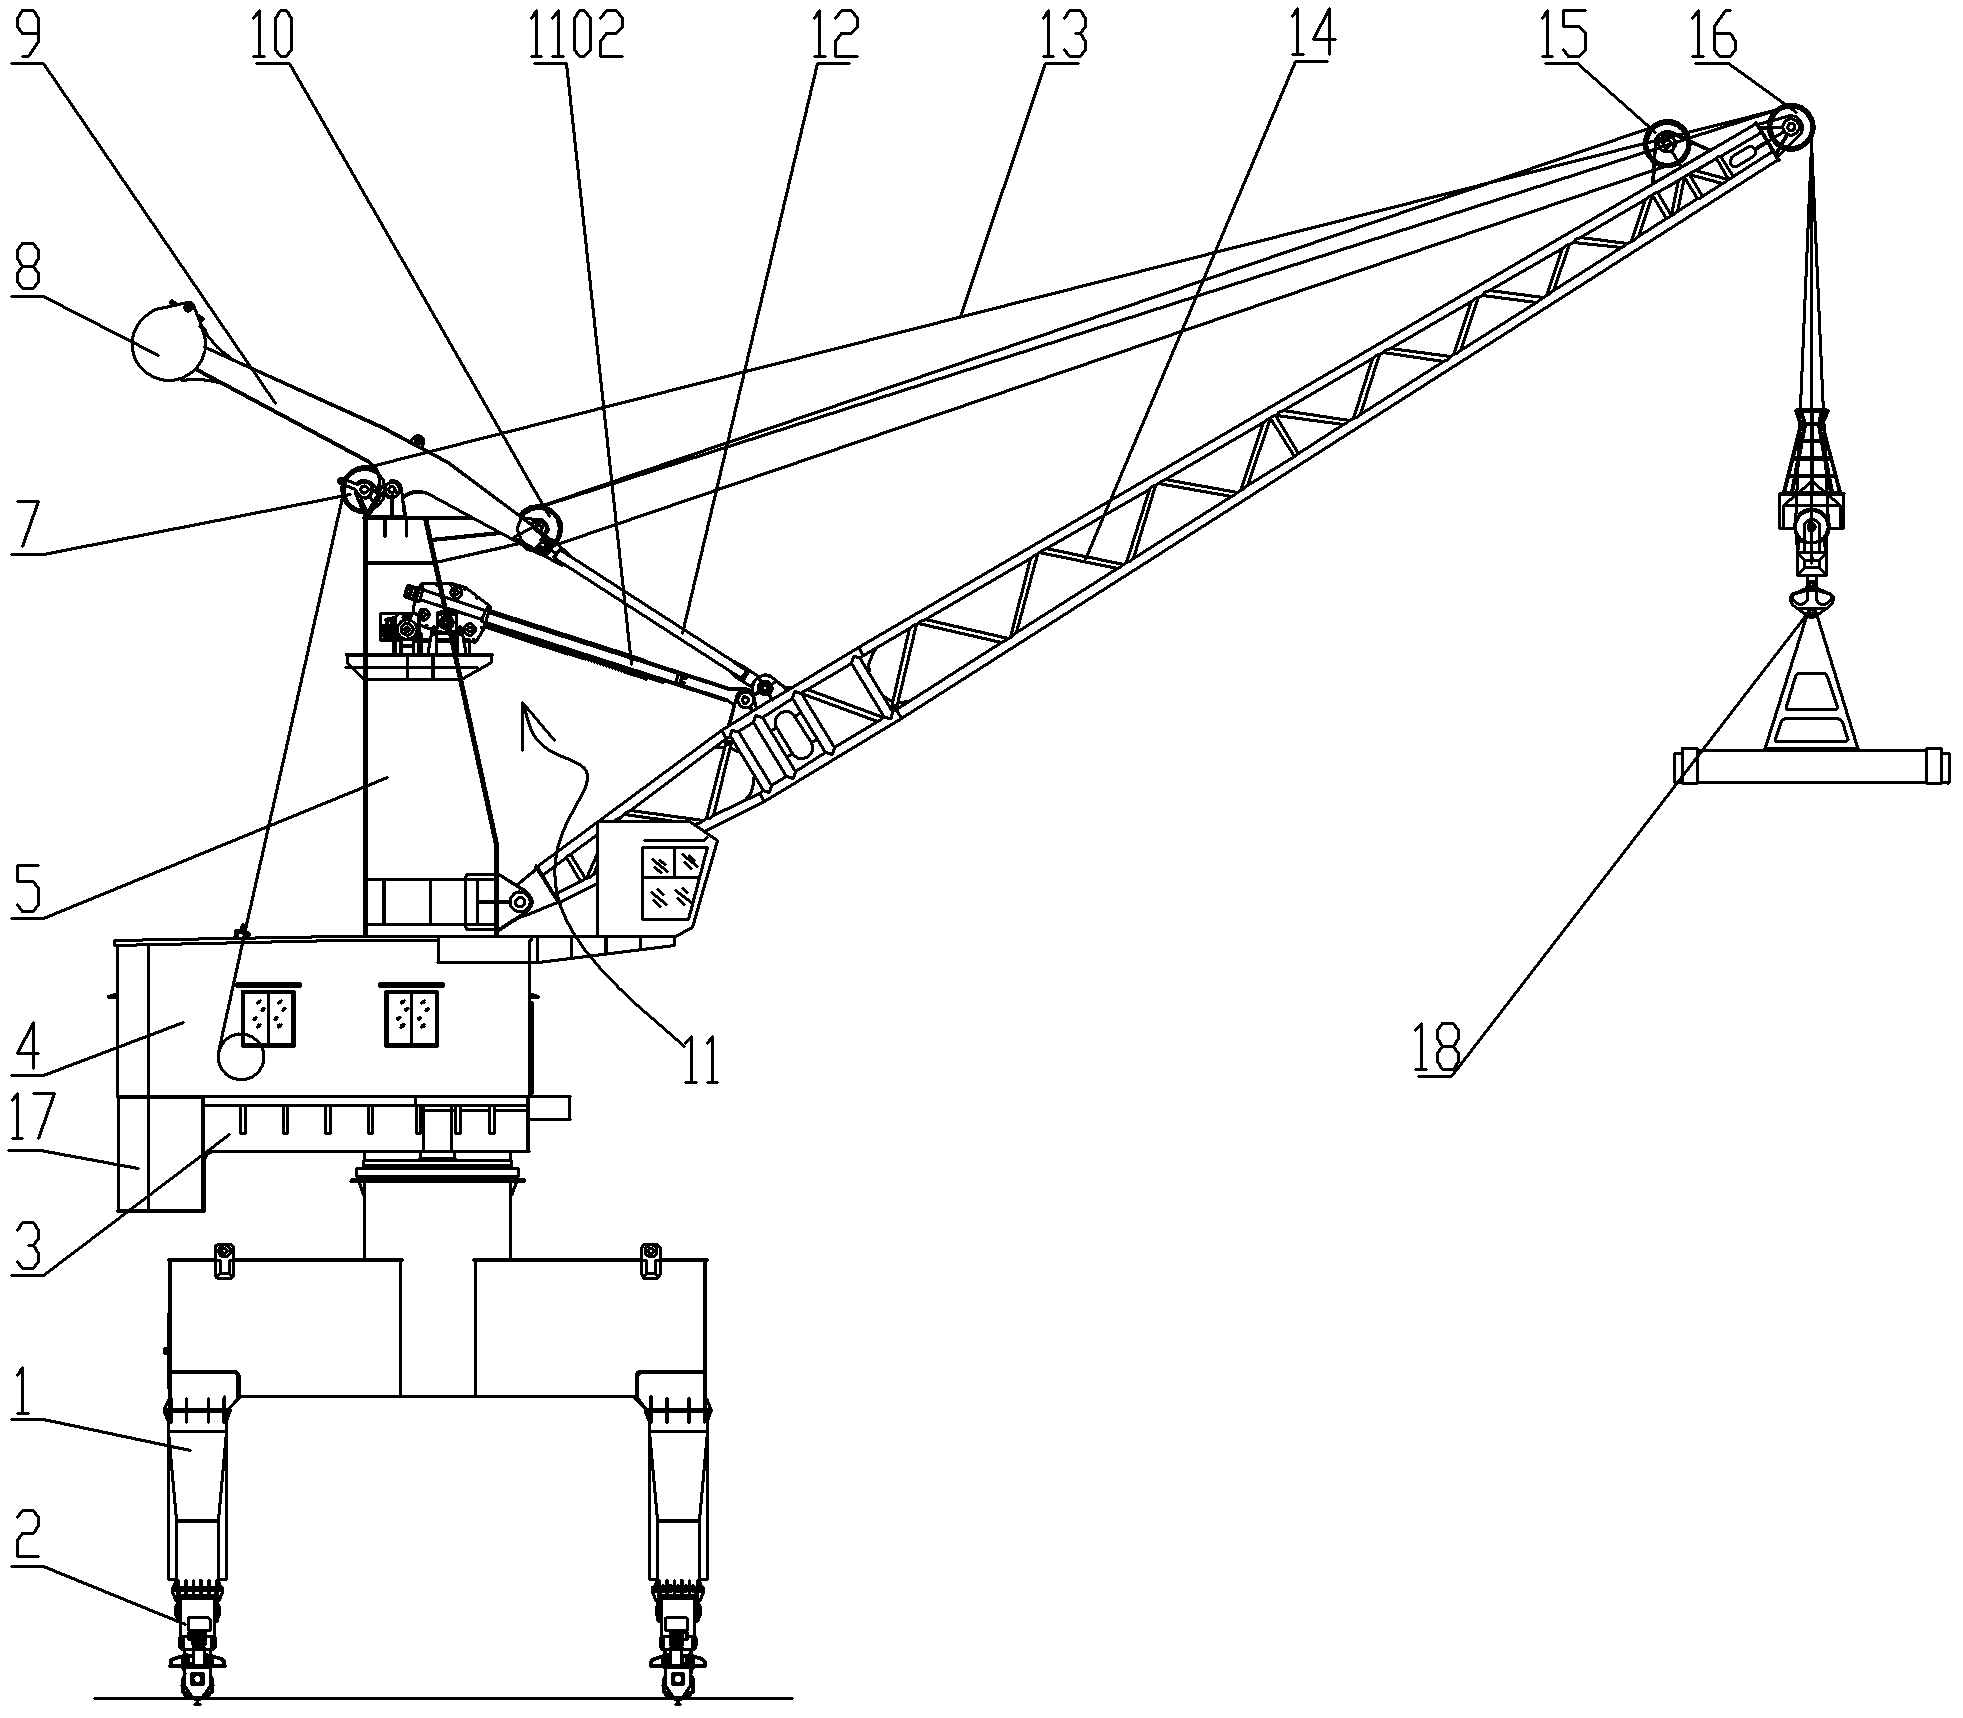 A multi-purpose single arm portal crane